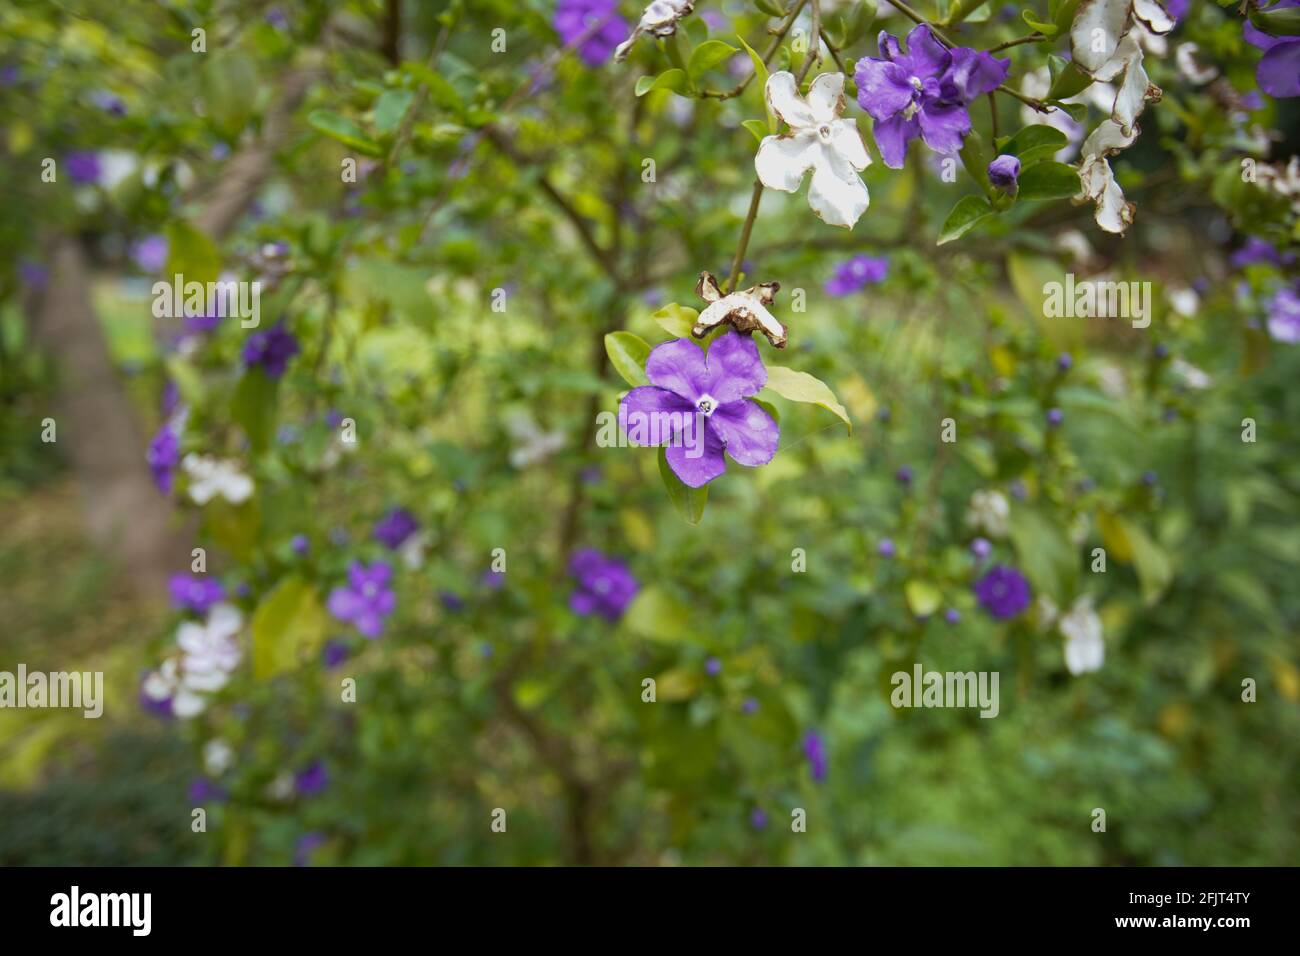 flowering Tibouchina bush Stock Photo